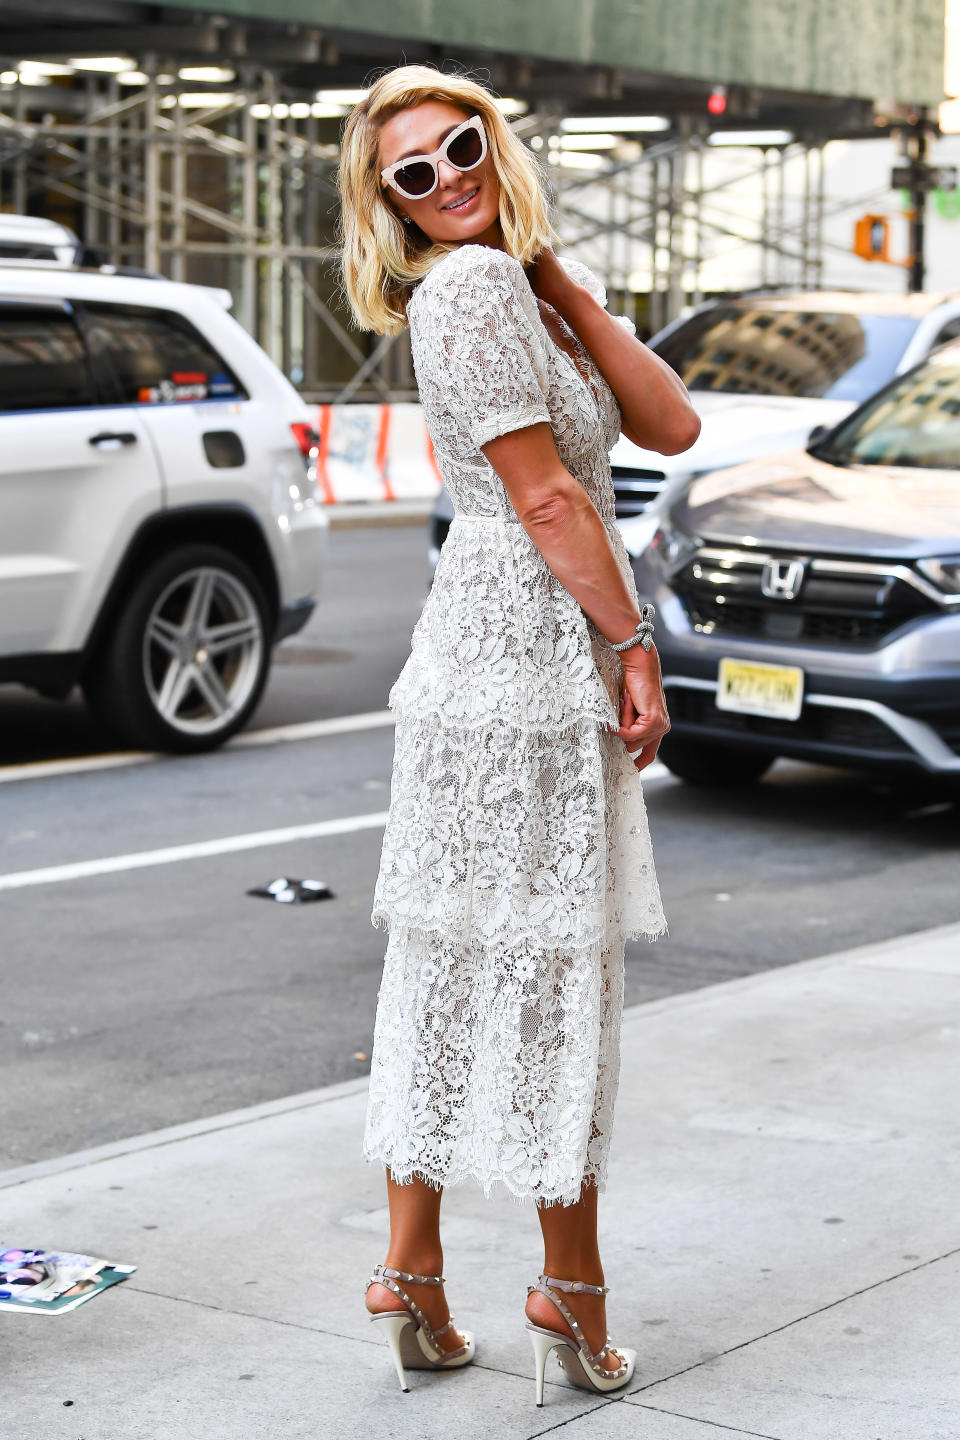 Paris Hilton poses in New York City. - Credit: Robert O'Neil / SplashNews.com